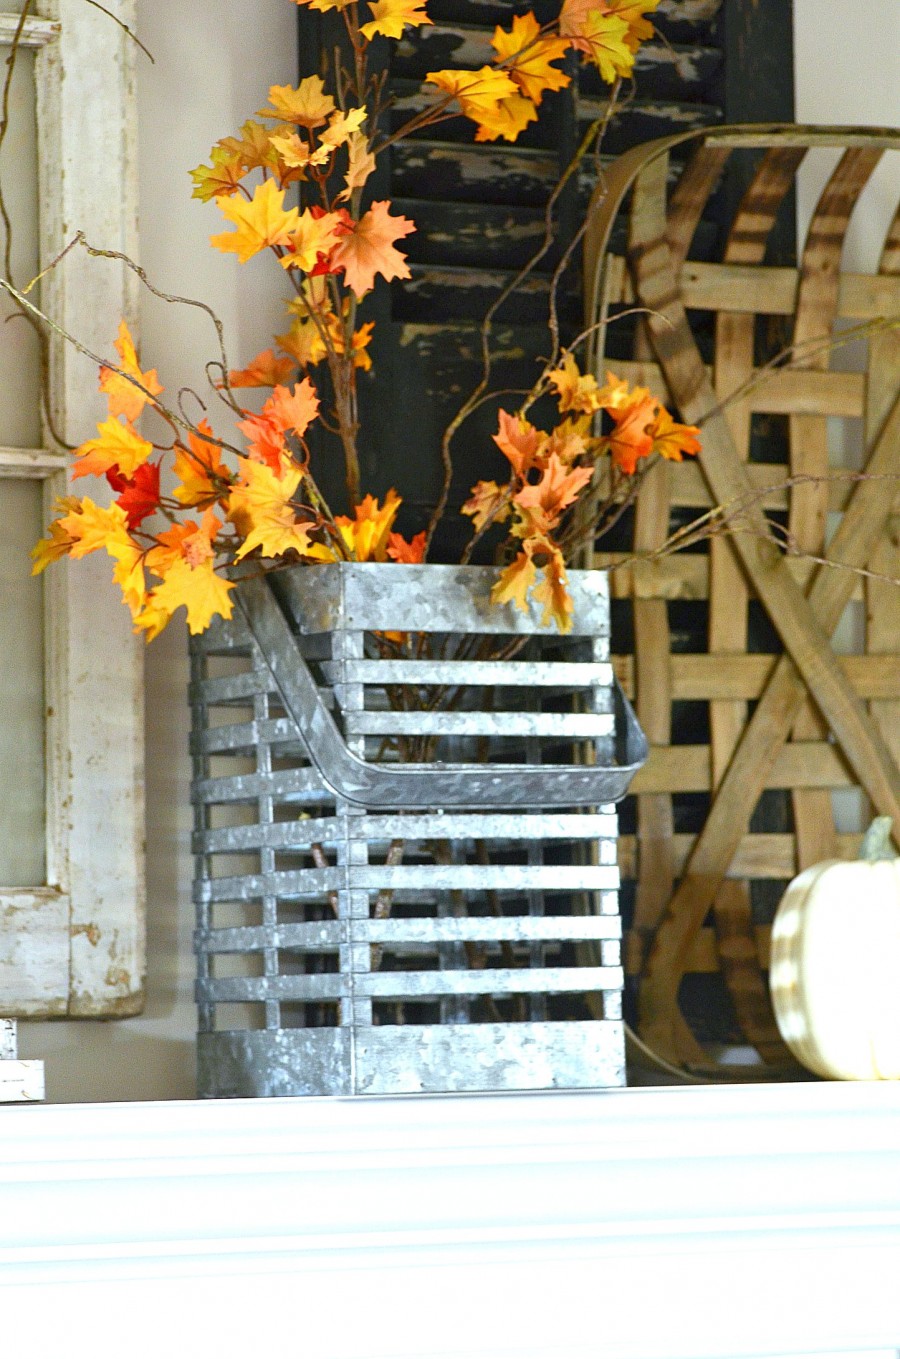 FALL MANTEL FARMHOUSE STYLE- Creating a simple farmhouse mantel with a fall touch! -stonegableblog.com